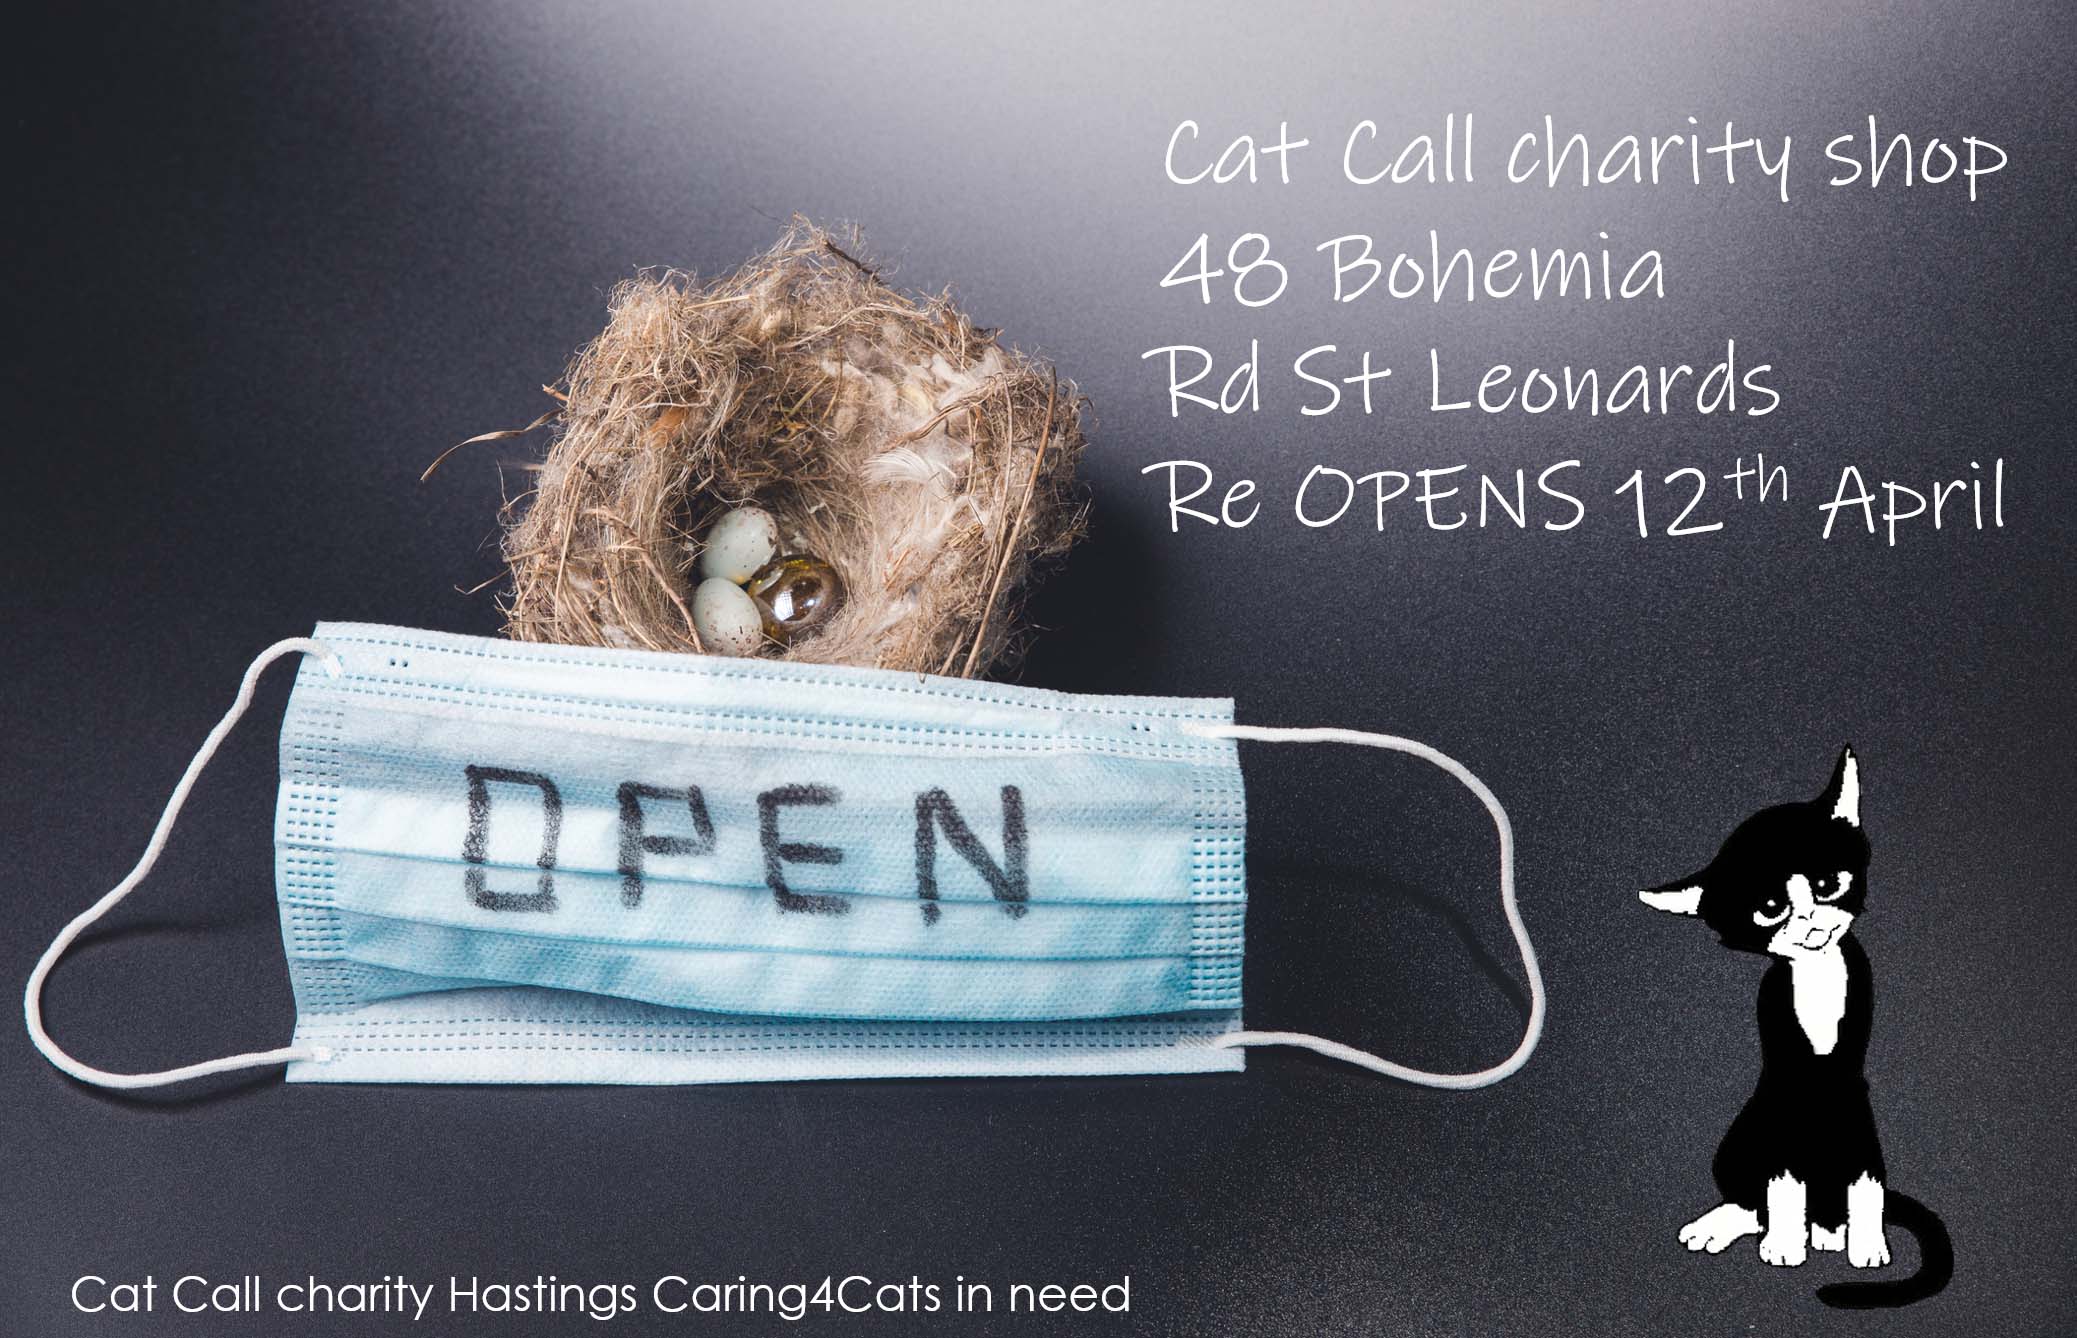 Cat Call Charity Shop Opens 12th April